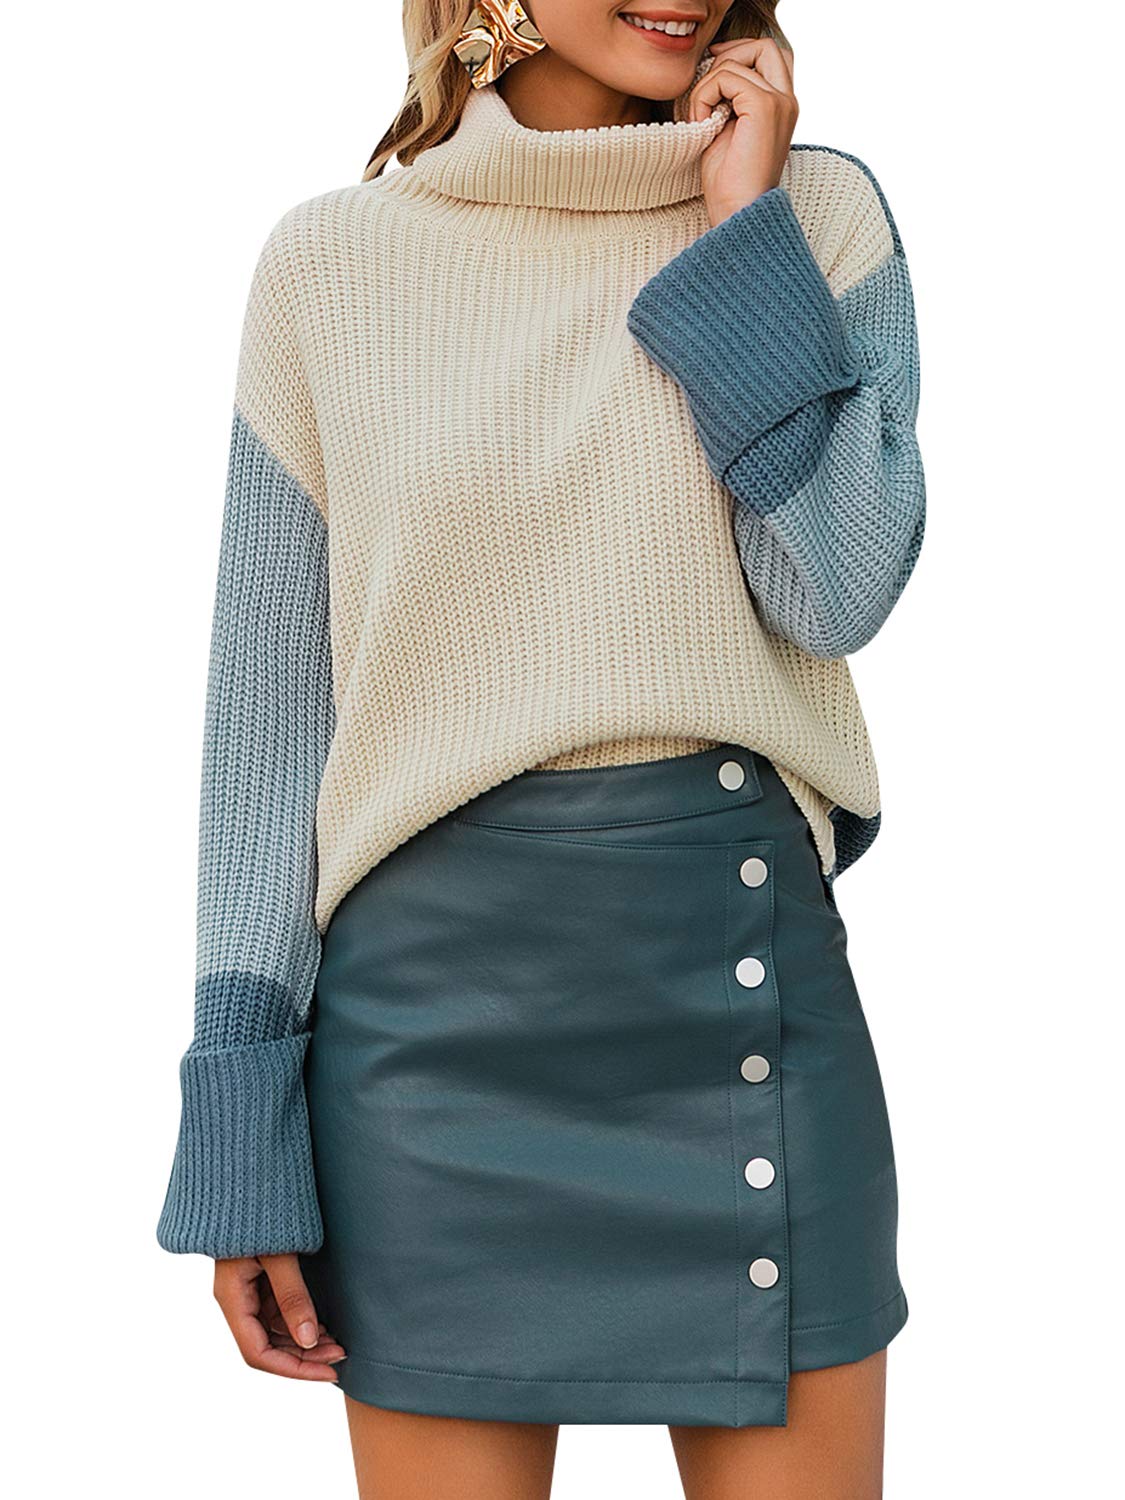 Berrygo Long Sleeve Turtleneck Sweater Pullover Knit Jumper